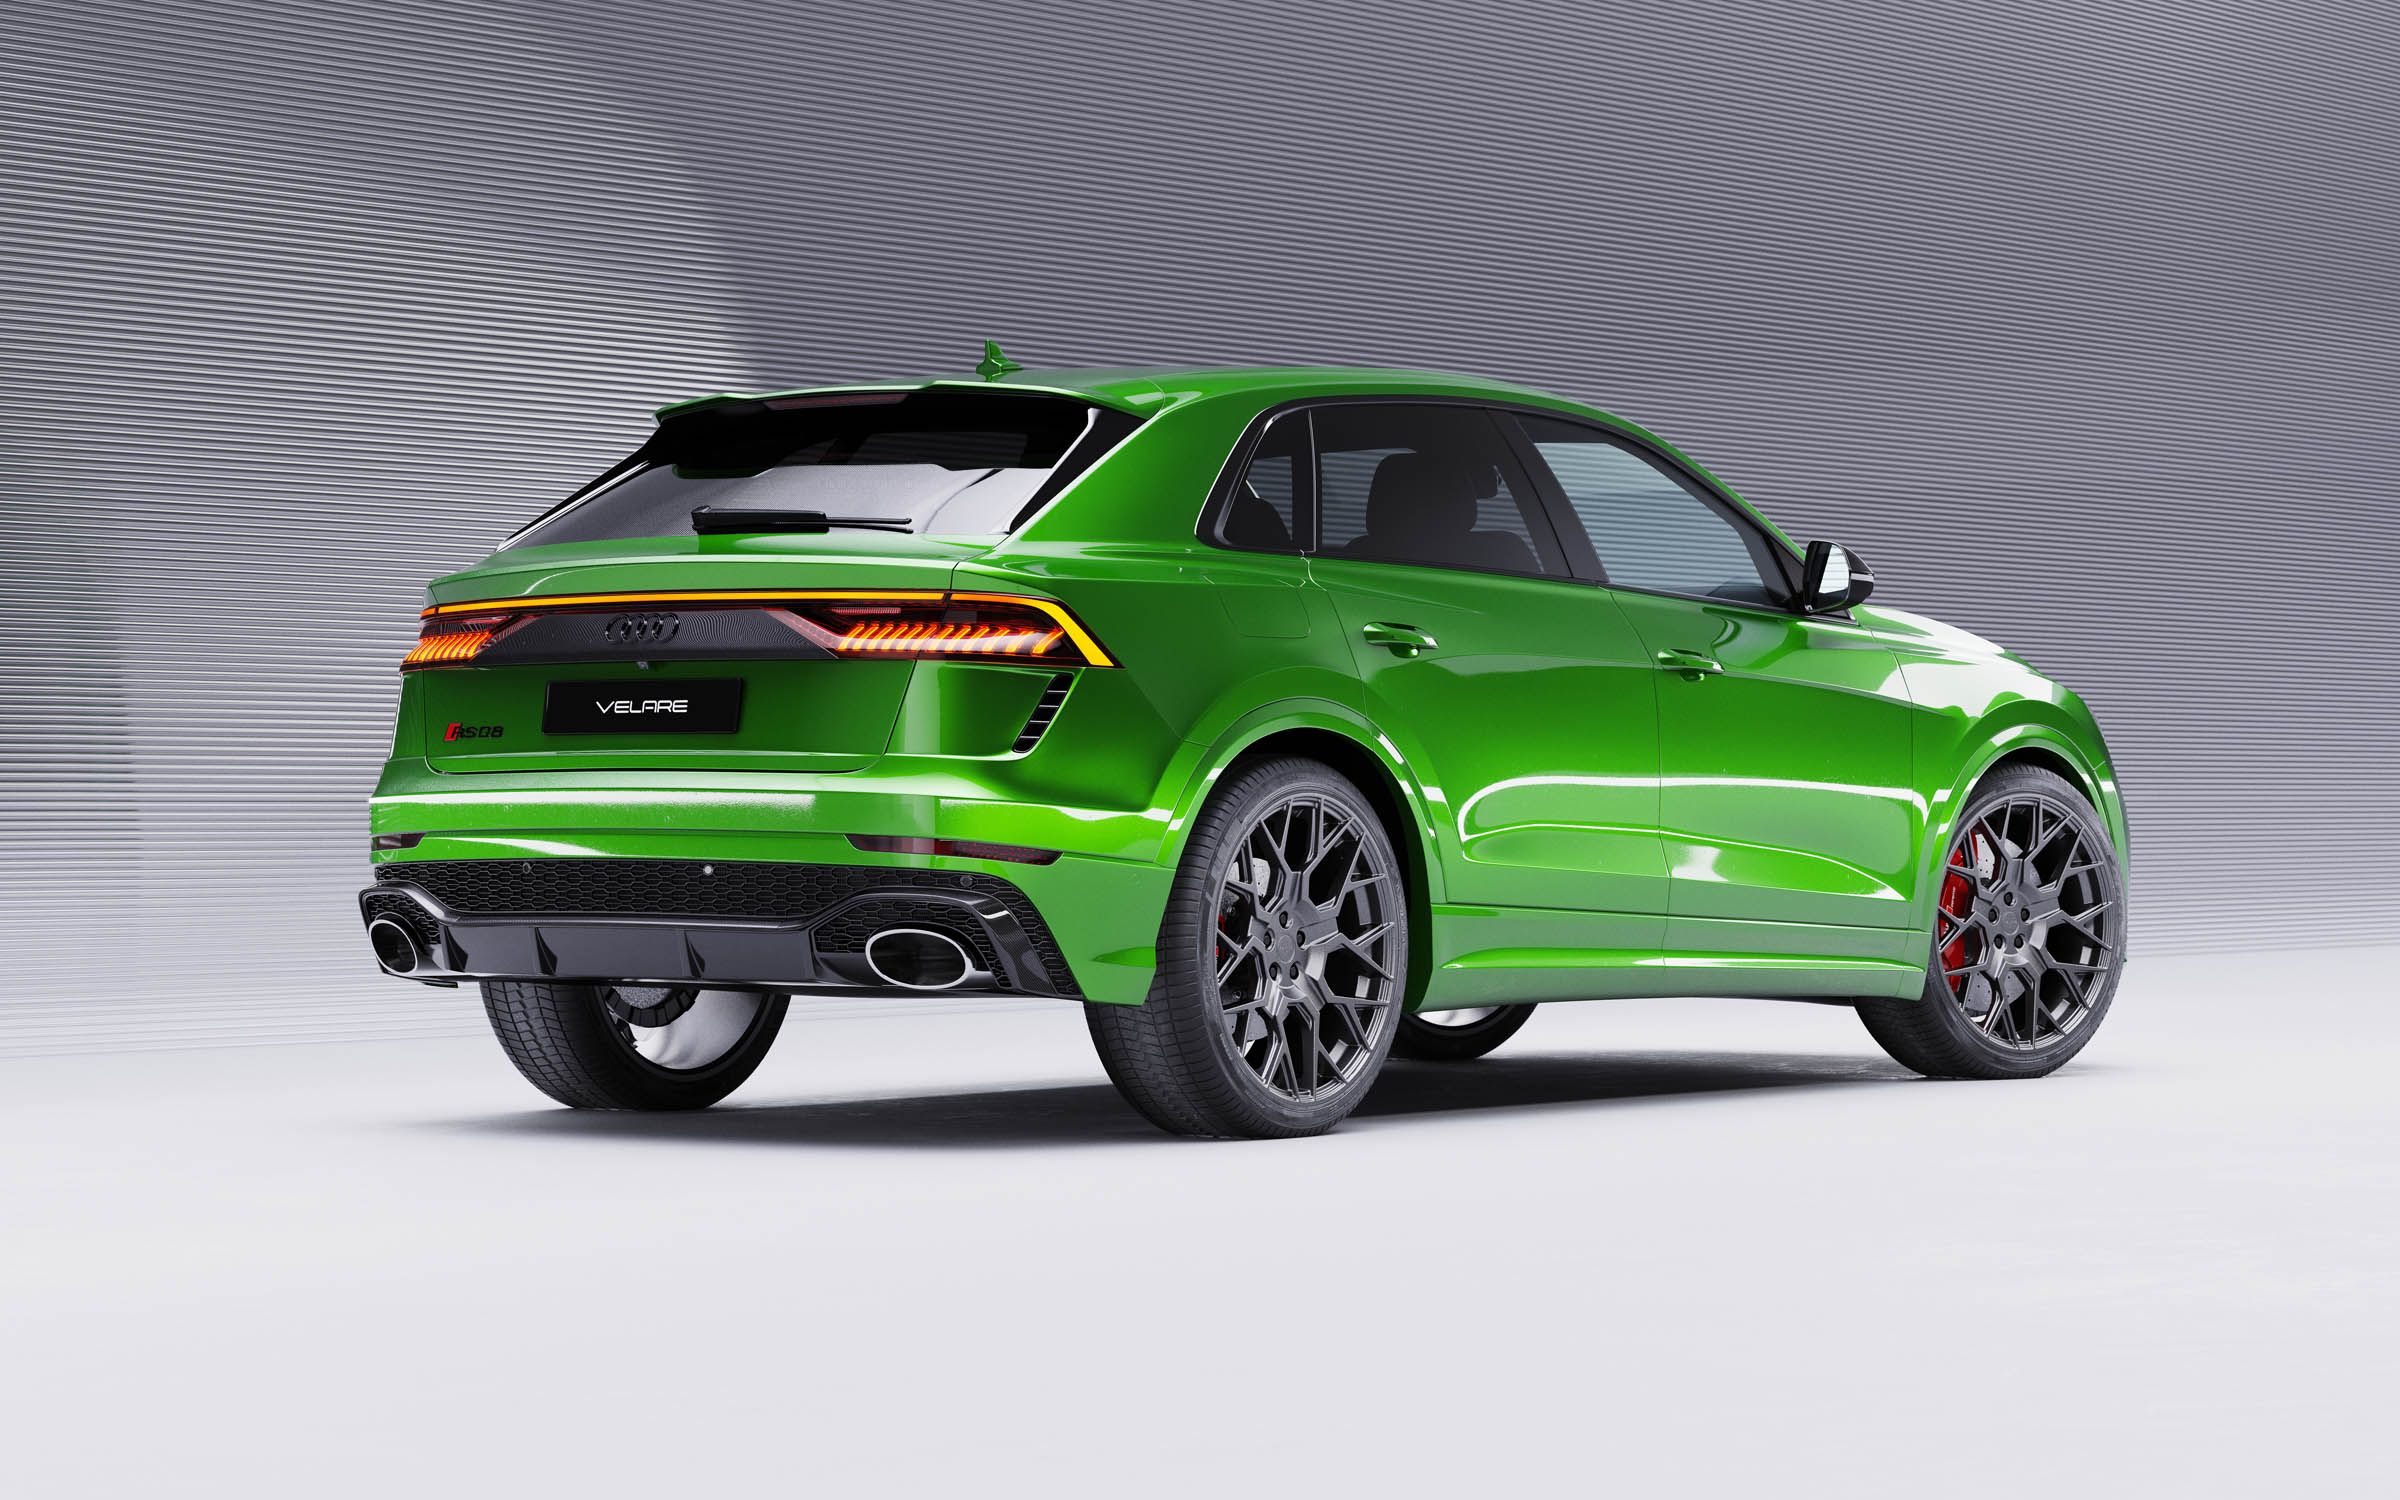 Audi Q8 RS 2020 Green Matt Graphite Velare VLR02 Wipdesigns 3D CGI Visualisation 16